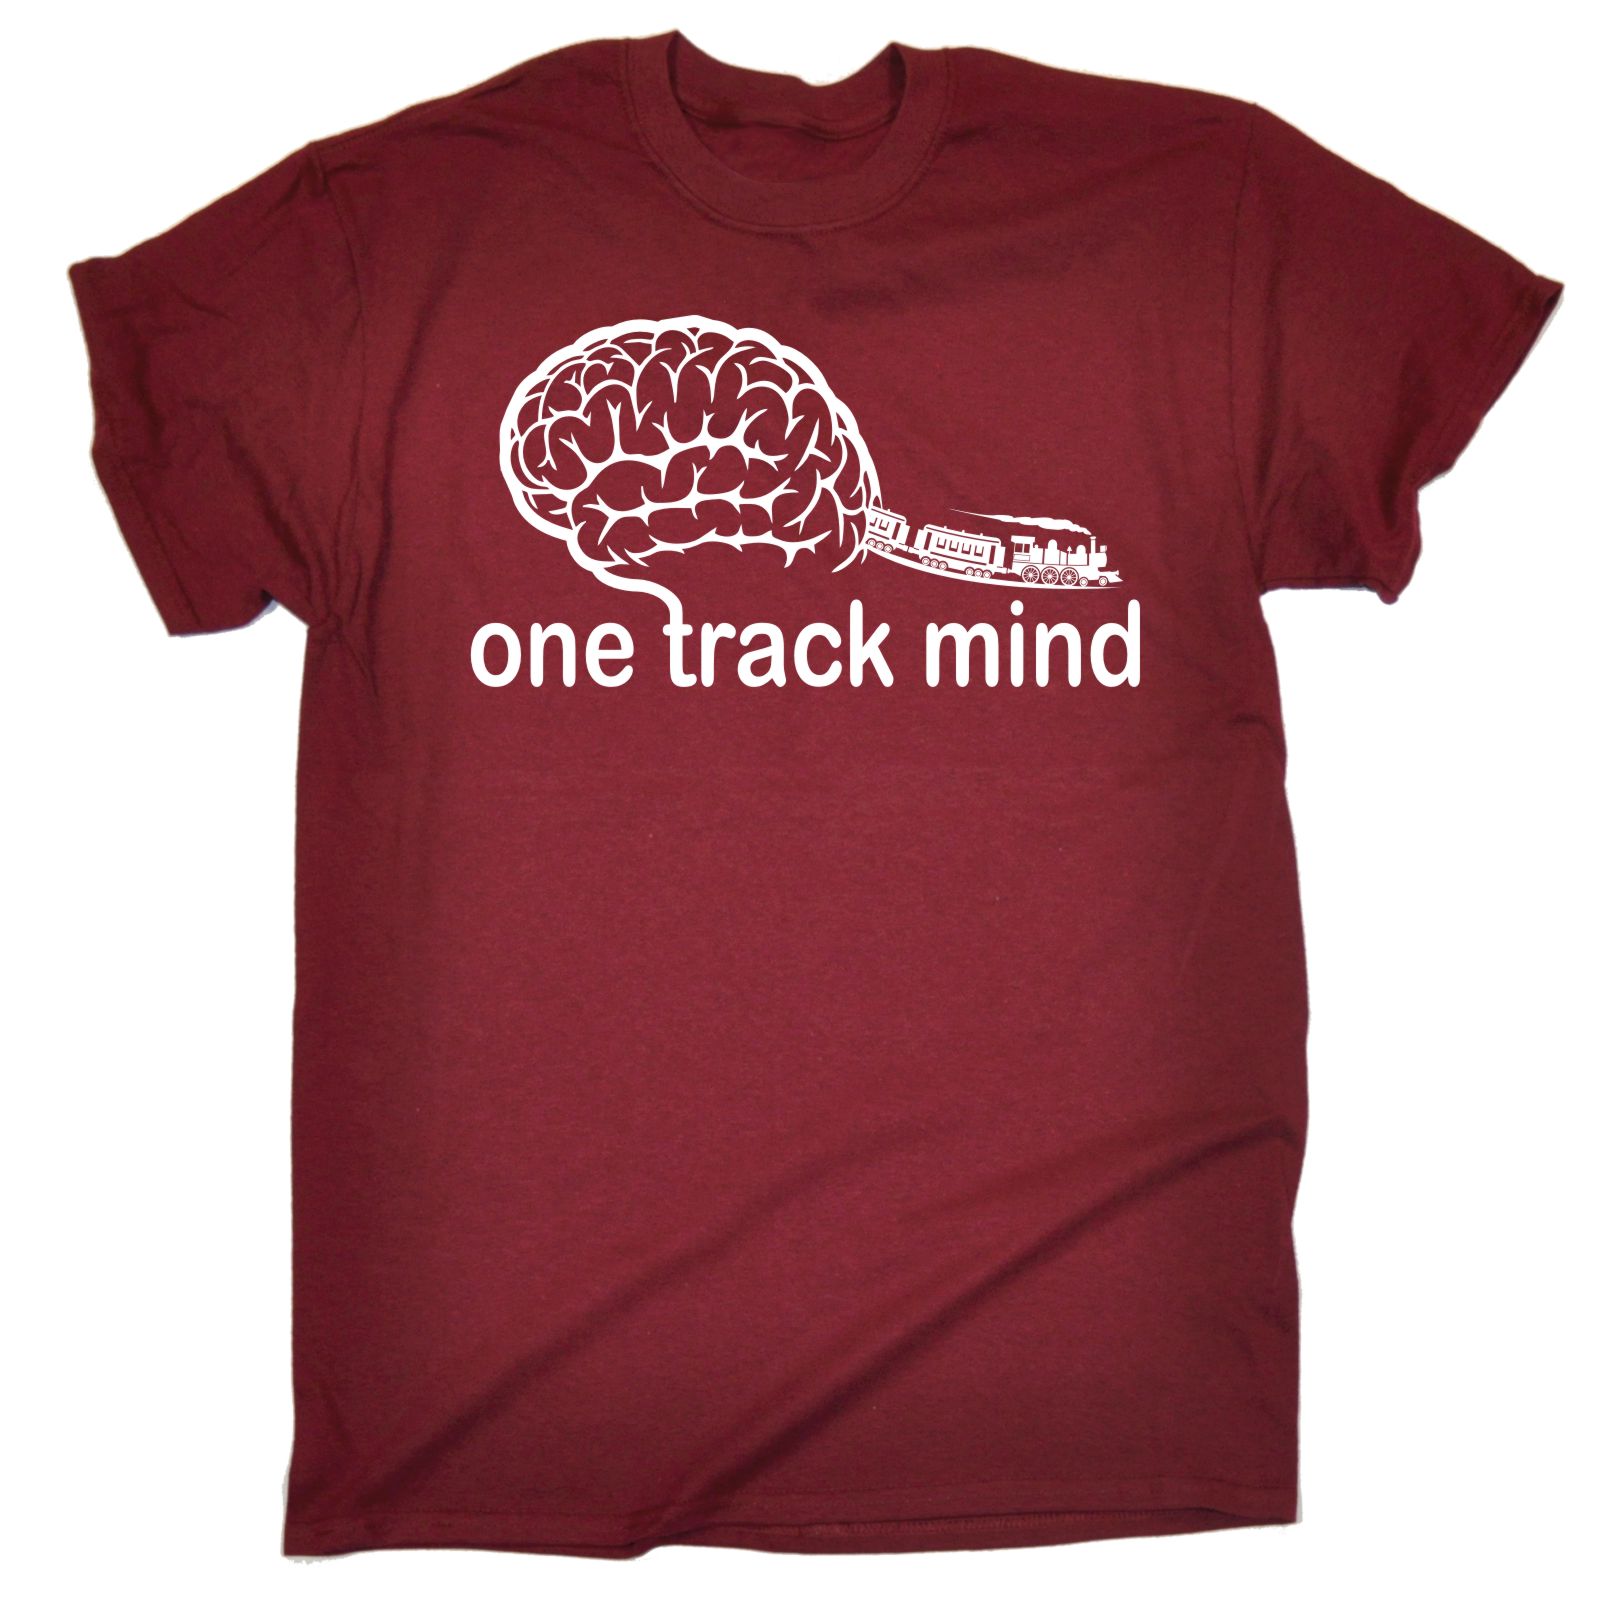 One-track mind Define One-track mind at Dictionarycom